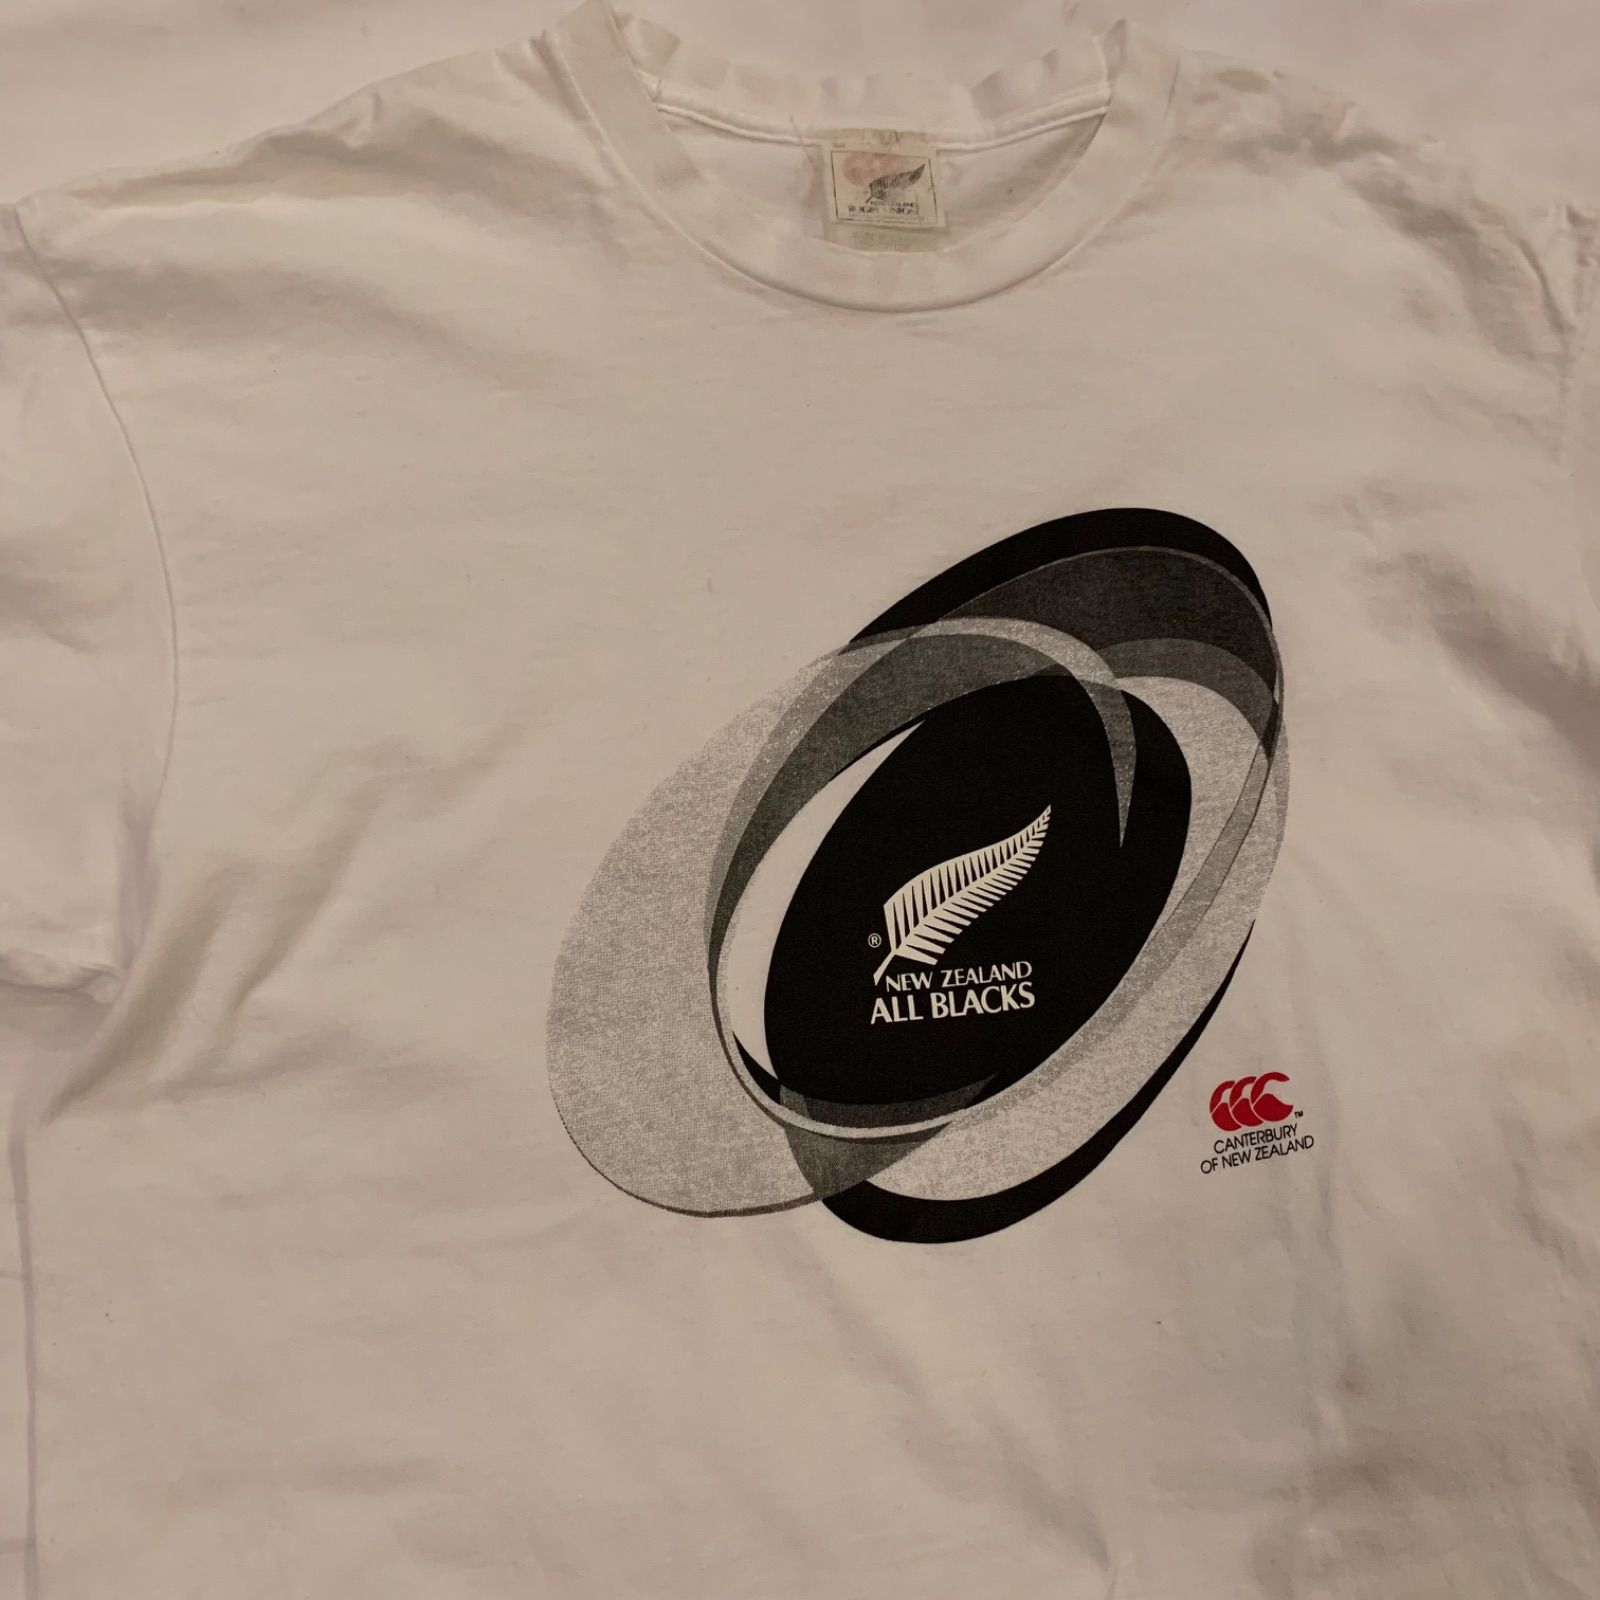 90s CANTERBURY “New Zealand All Blacks” S/S Graphic T-Shirt